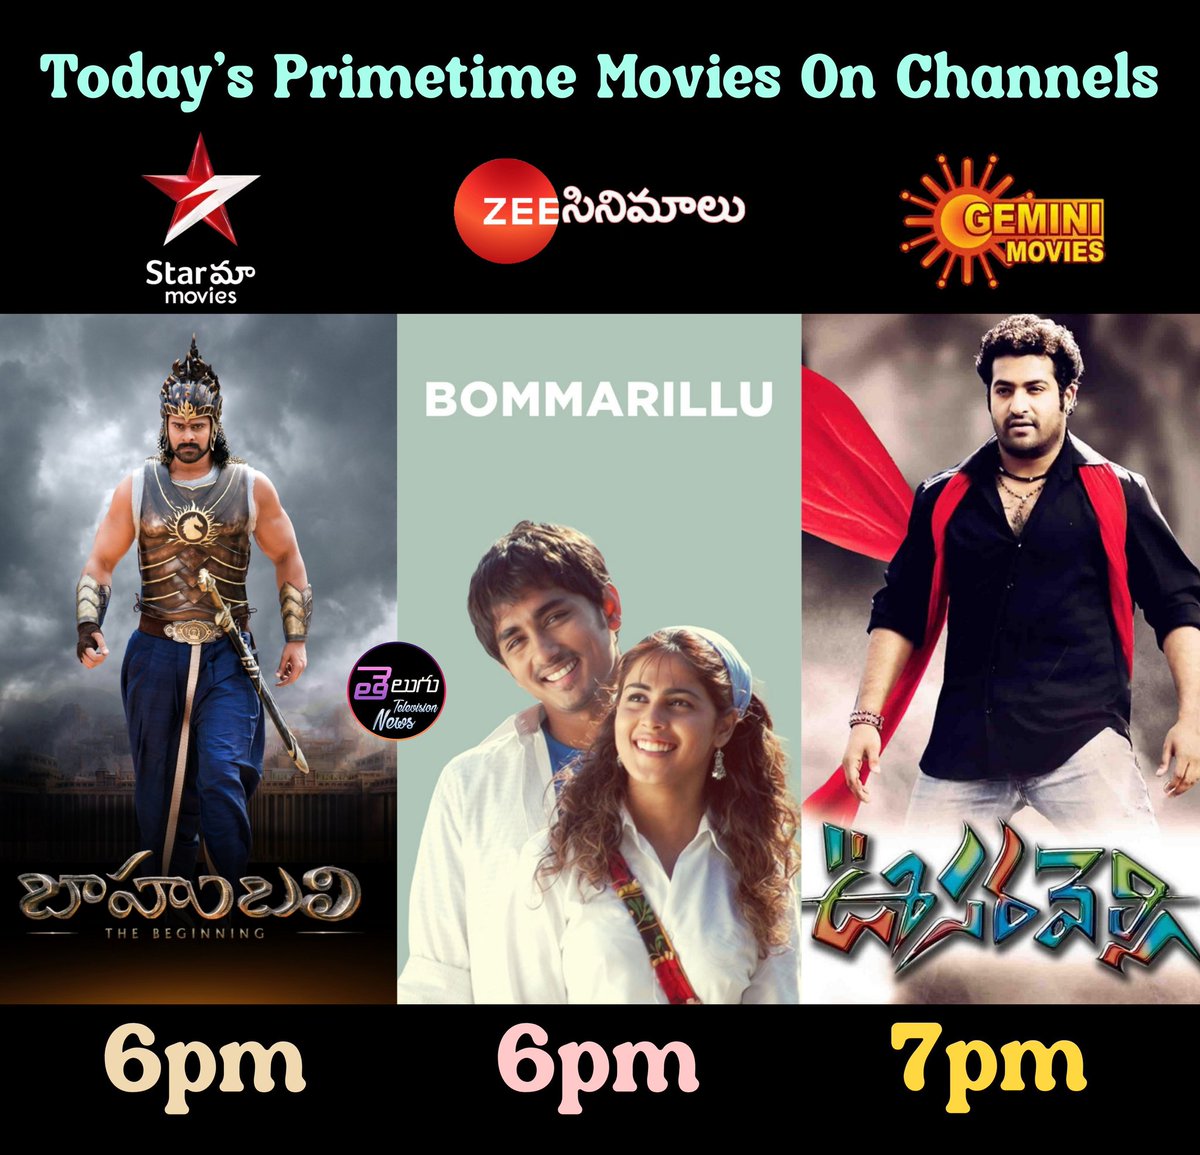 Today primetime movies #Bahubali at 6pm on Star Maa Movies #Bommarillu at 6pm on Zee Cinemalu #Oosaravelli at 7pm on Gemini Movies #Prabhas #Siddharth #NTR #AnushkaShetty #Tamannaah #Genelia